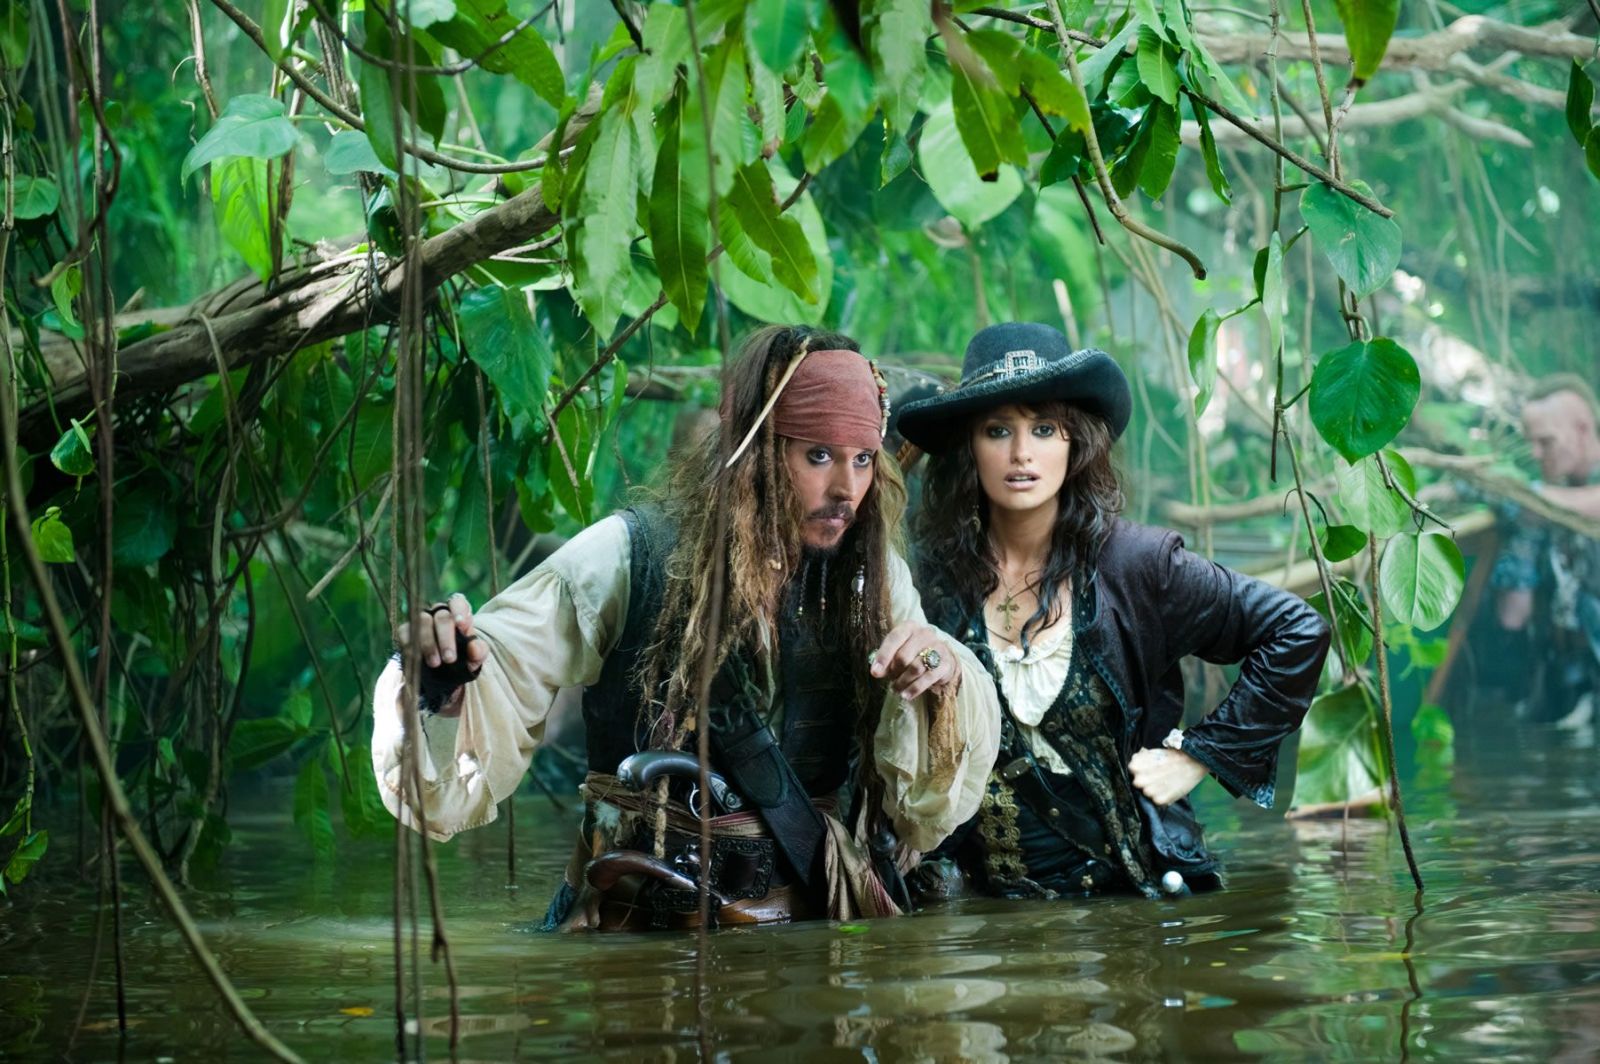 http://4.bp.blogspot.com/-vaHmvOHHJ2A/TdXJlzw3NaI/AAAAAAAAFWk/Hx5d3X2J53c/s1600/pirates-4-movie-image-johnny-depp-penelope-cruz-01.jpg